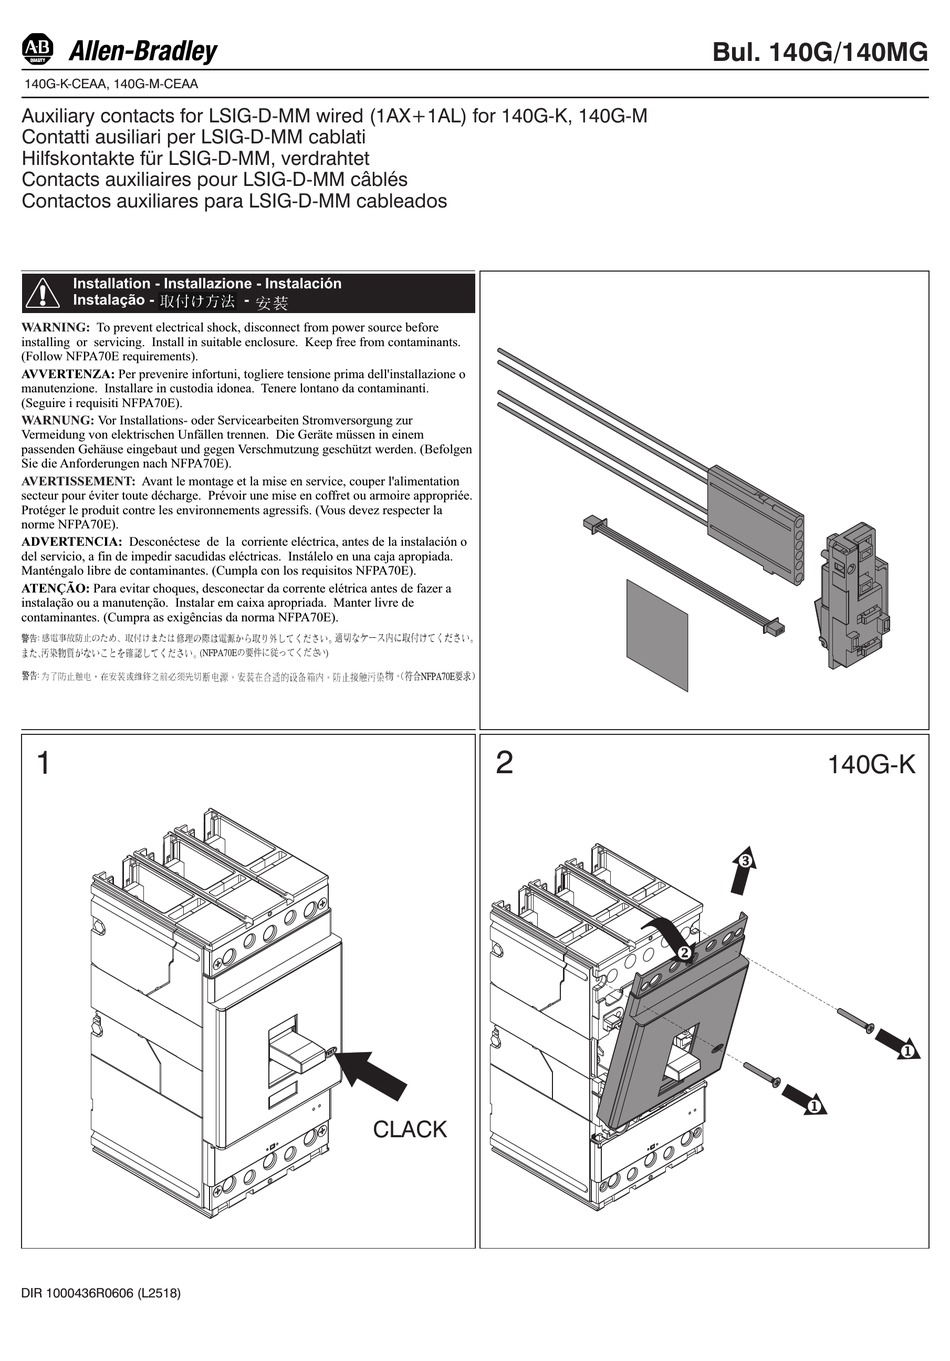 allen-bradley-140g-k-ceaa-installation-manual-pdf-download-manualslib